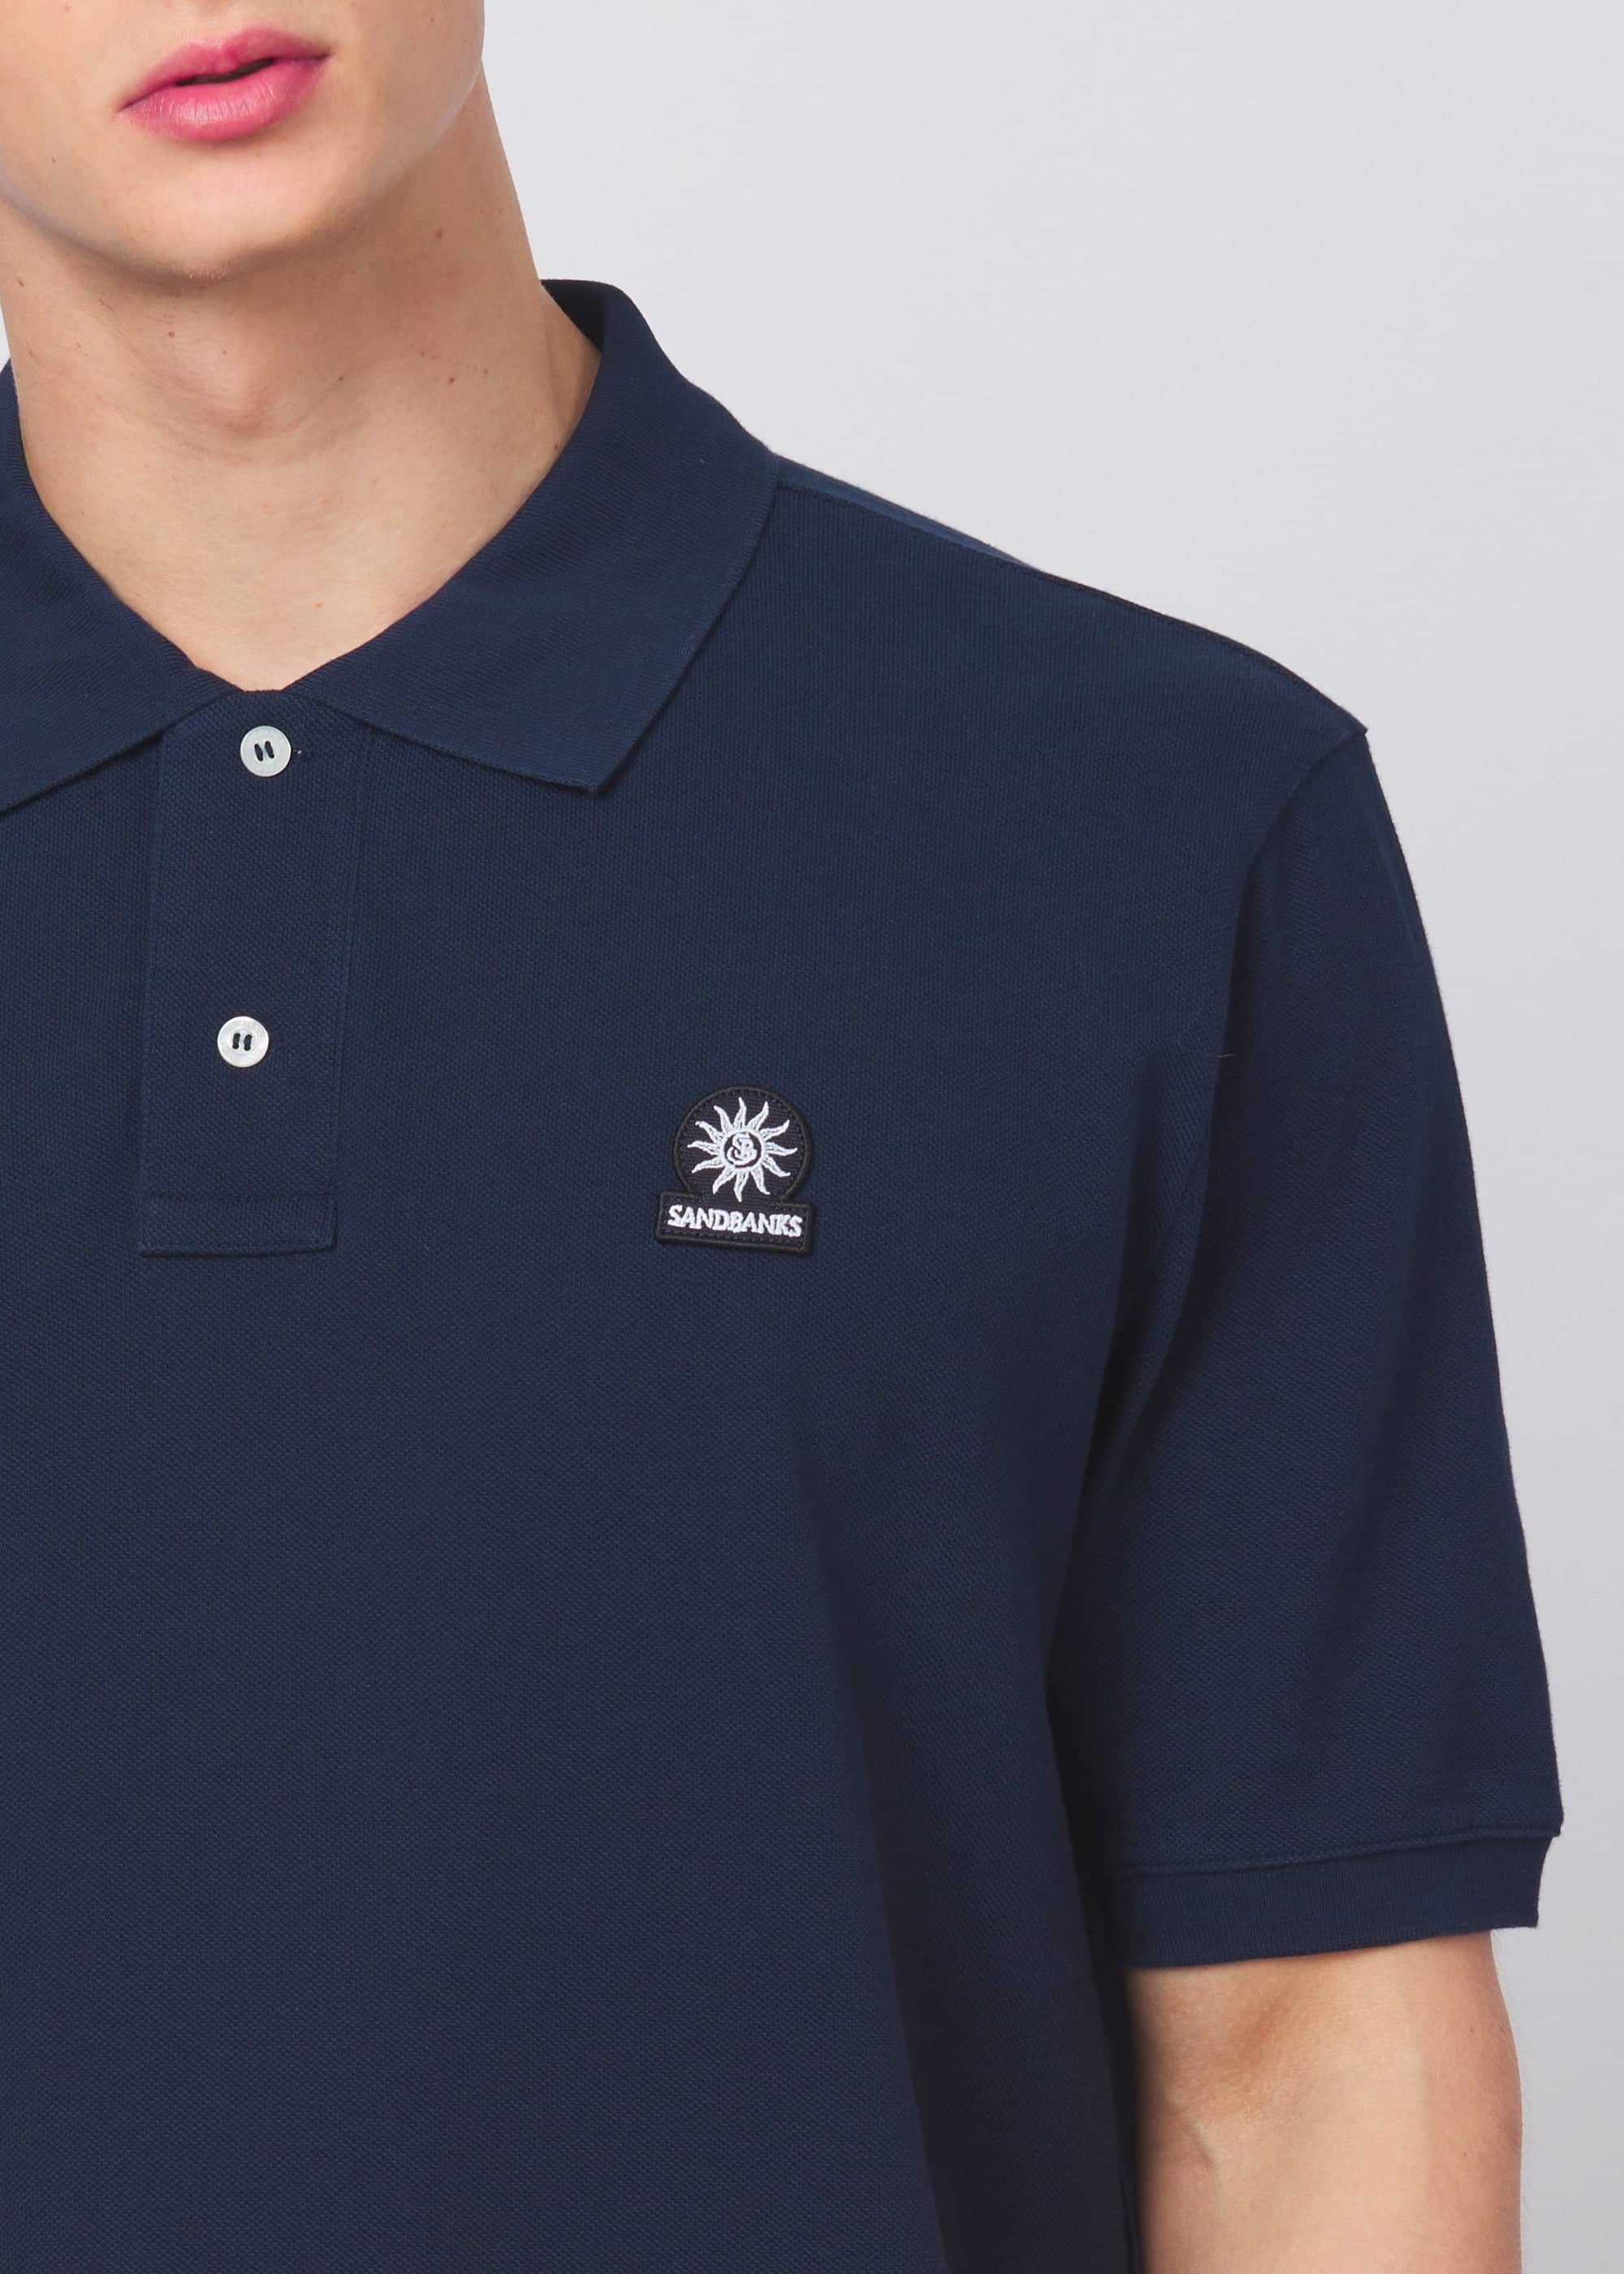 Sandbanks Badge Logo Pique Polo Shirt- Navy - Sandbanks